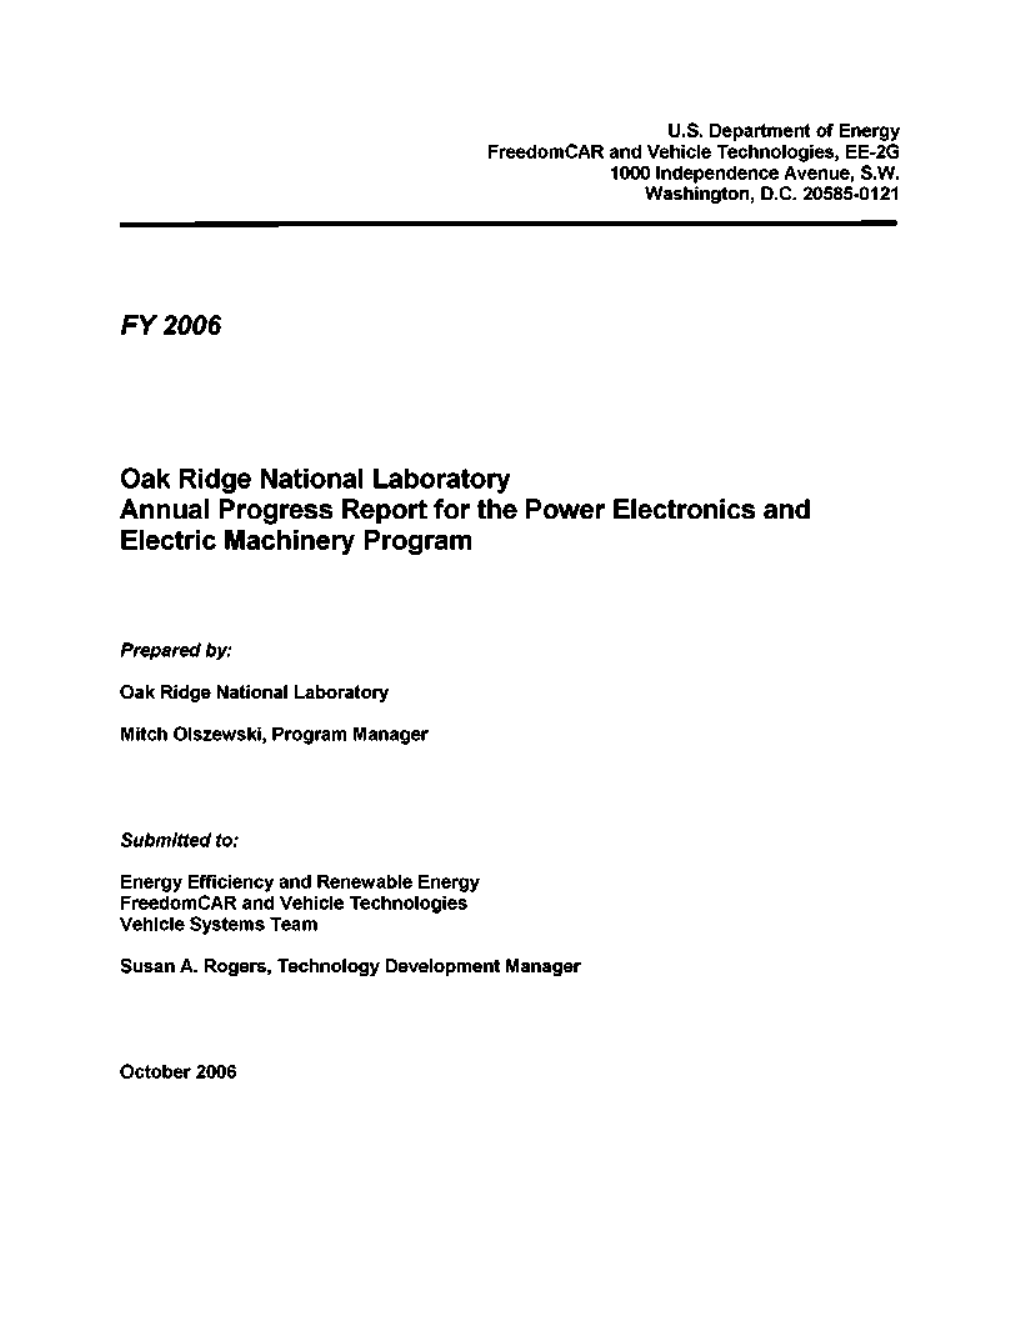 FY 2006 Oak Ridge National Laboratory Annual Progress Report